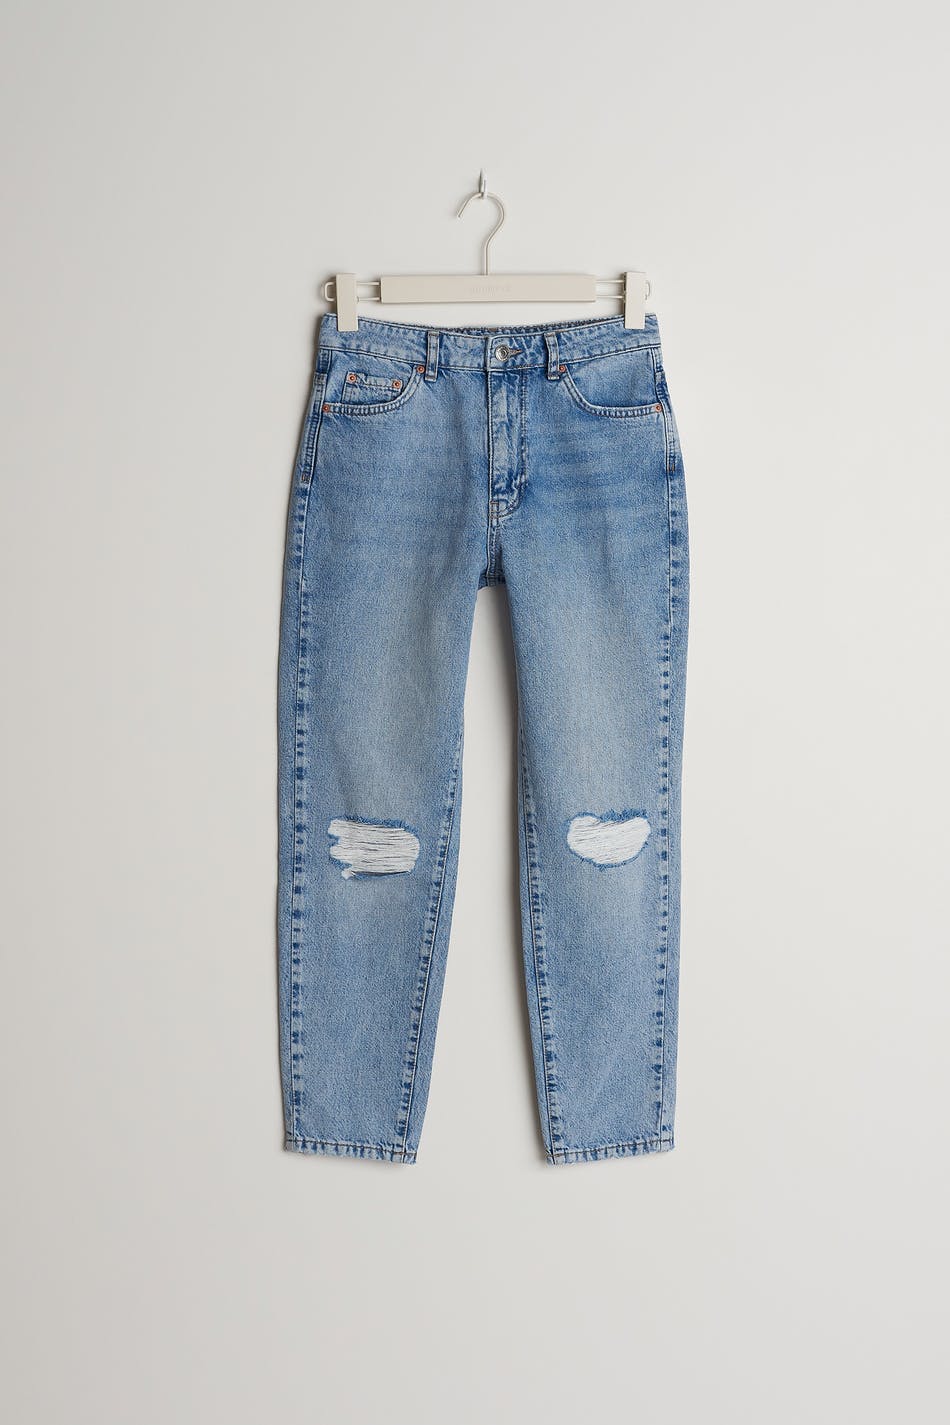 Gina Tricot Dagny PETITE jeans 30  Sea blue dest (5114)